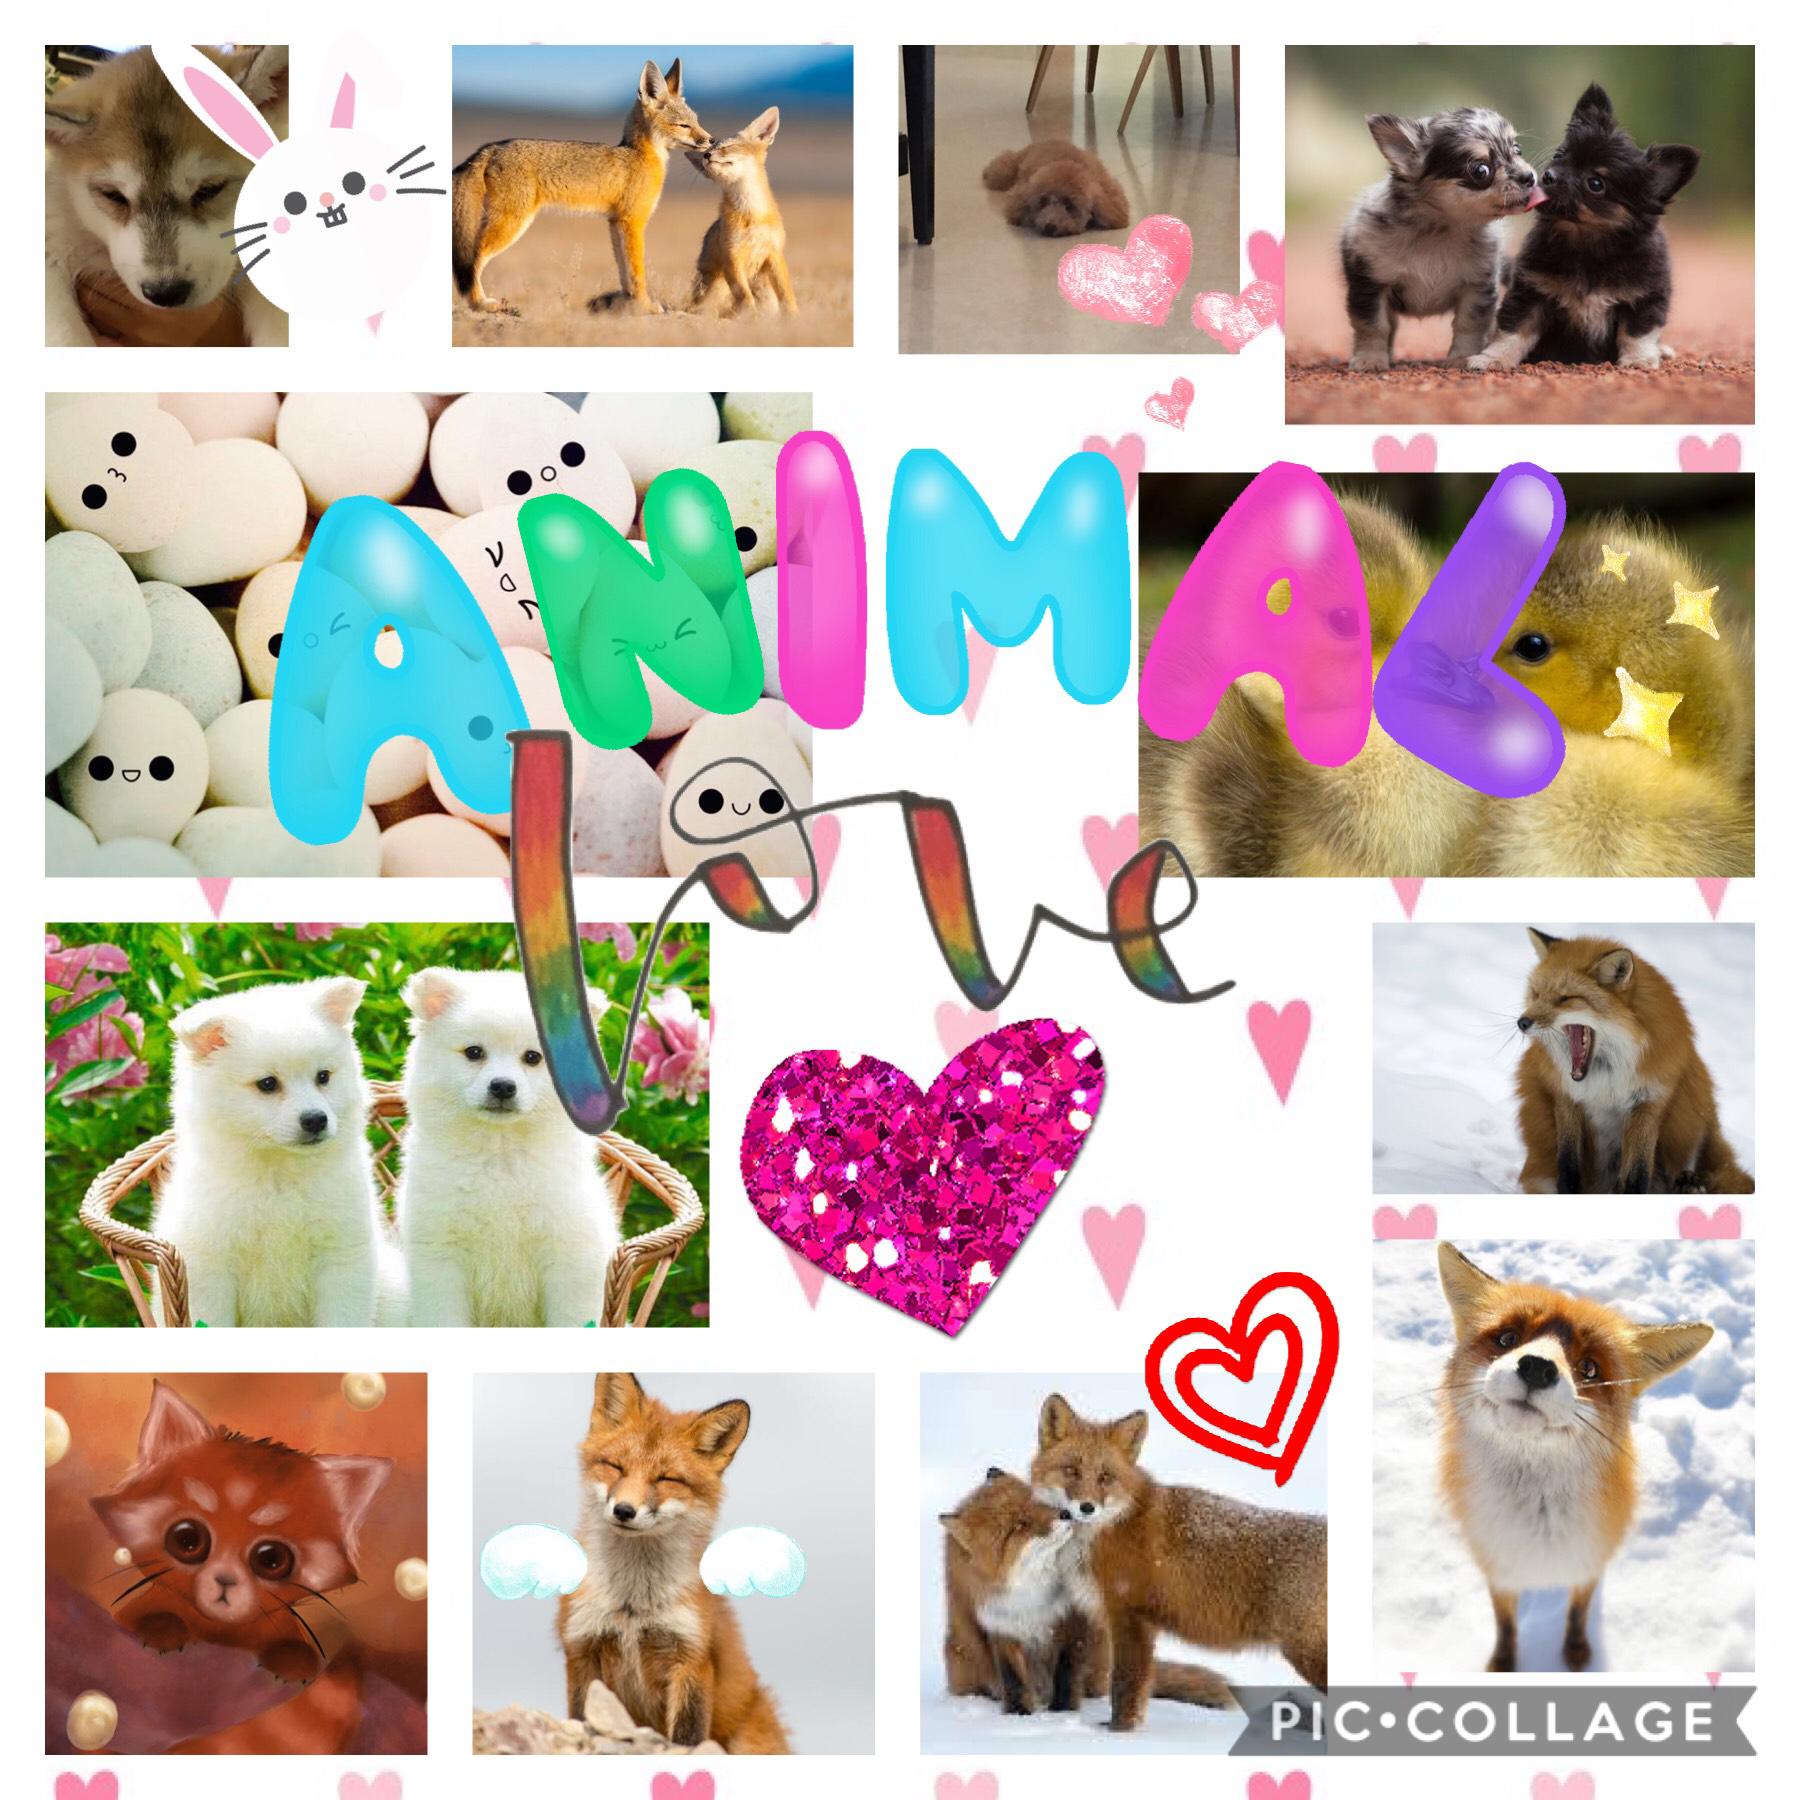 #AnimalLove #Like4Like #Cuteness #Overload #Hearts #AnimalsAreAngels 